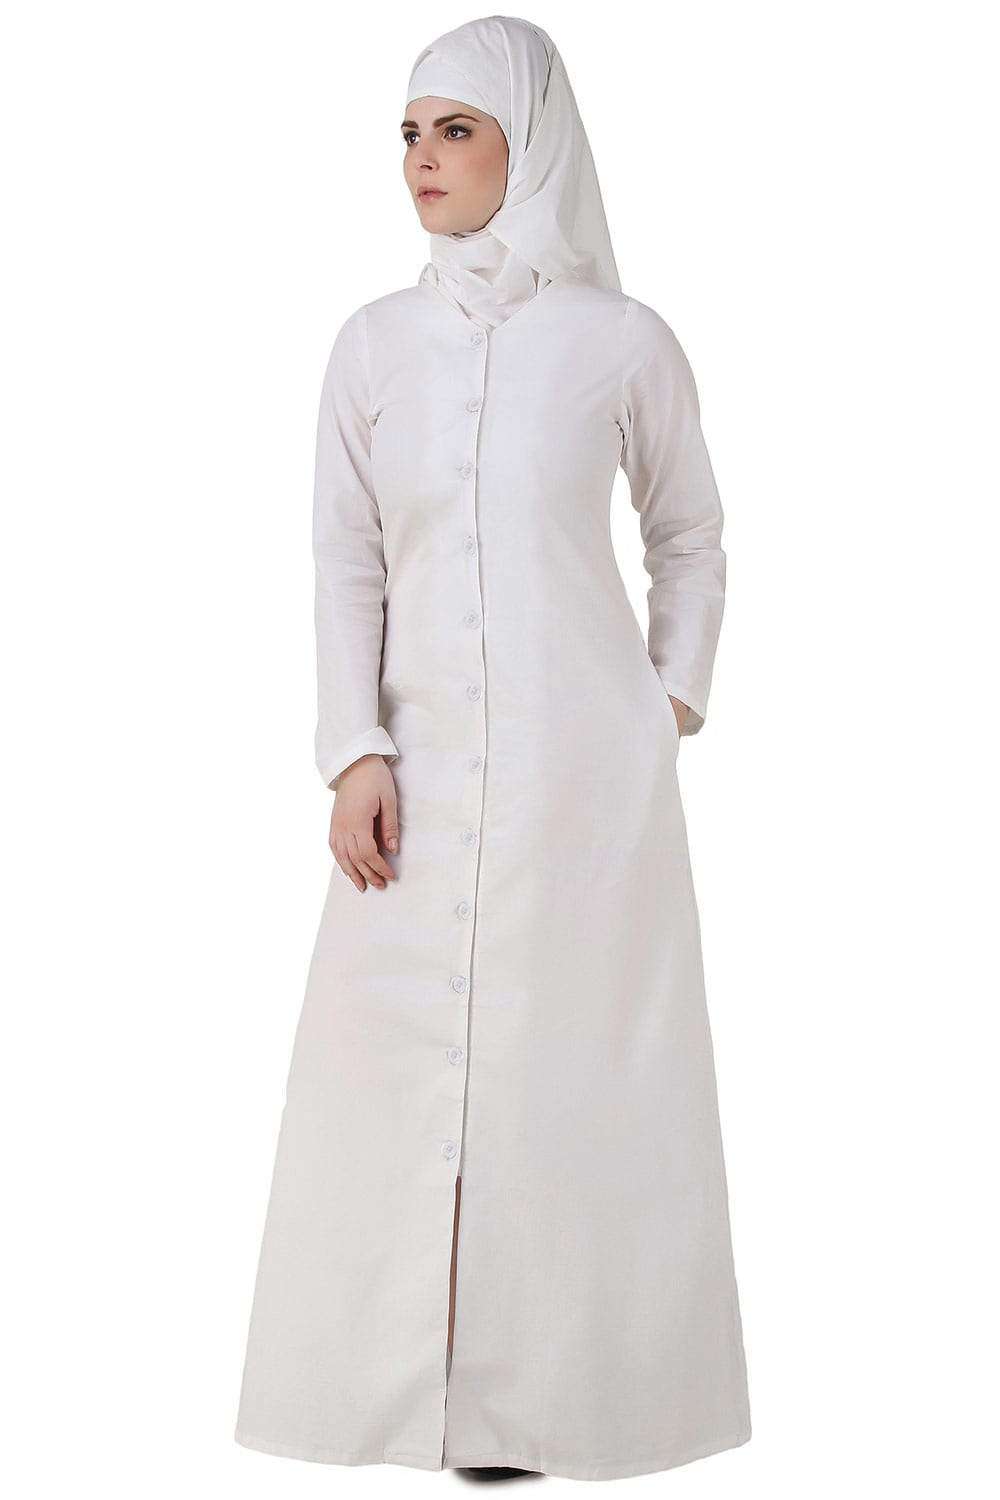 Faraza White Front Open Cotton Abaya Front